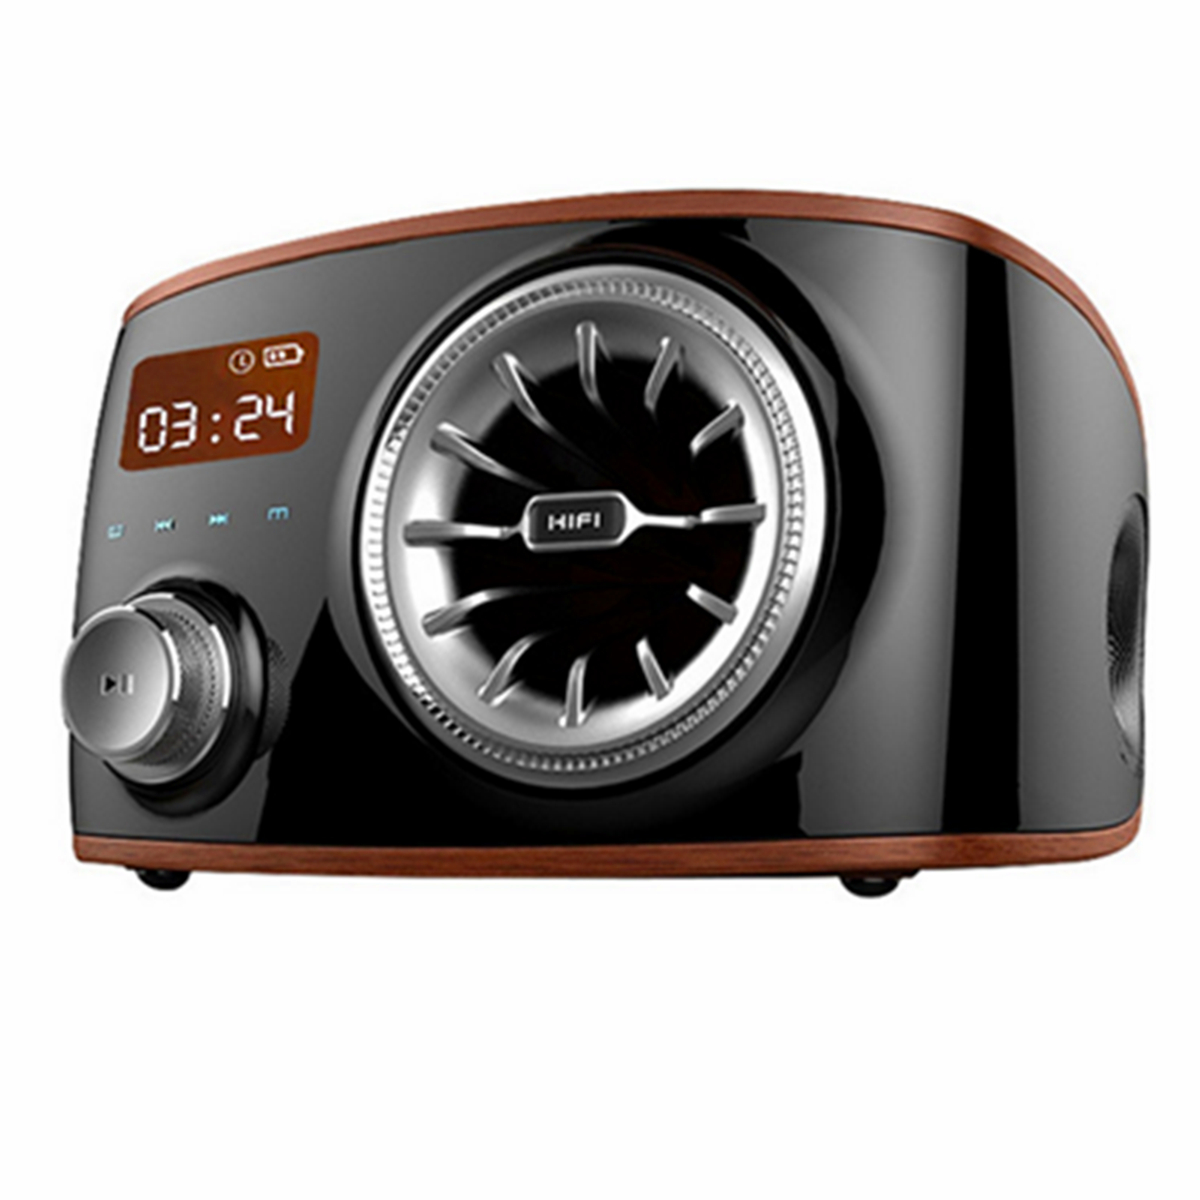 

HiFi Retro Wireless bluetooth Speaker Portable Alarm Clock FM Radio AUX TF Card 2000mAh Speaker